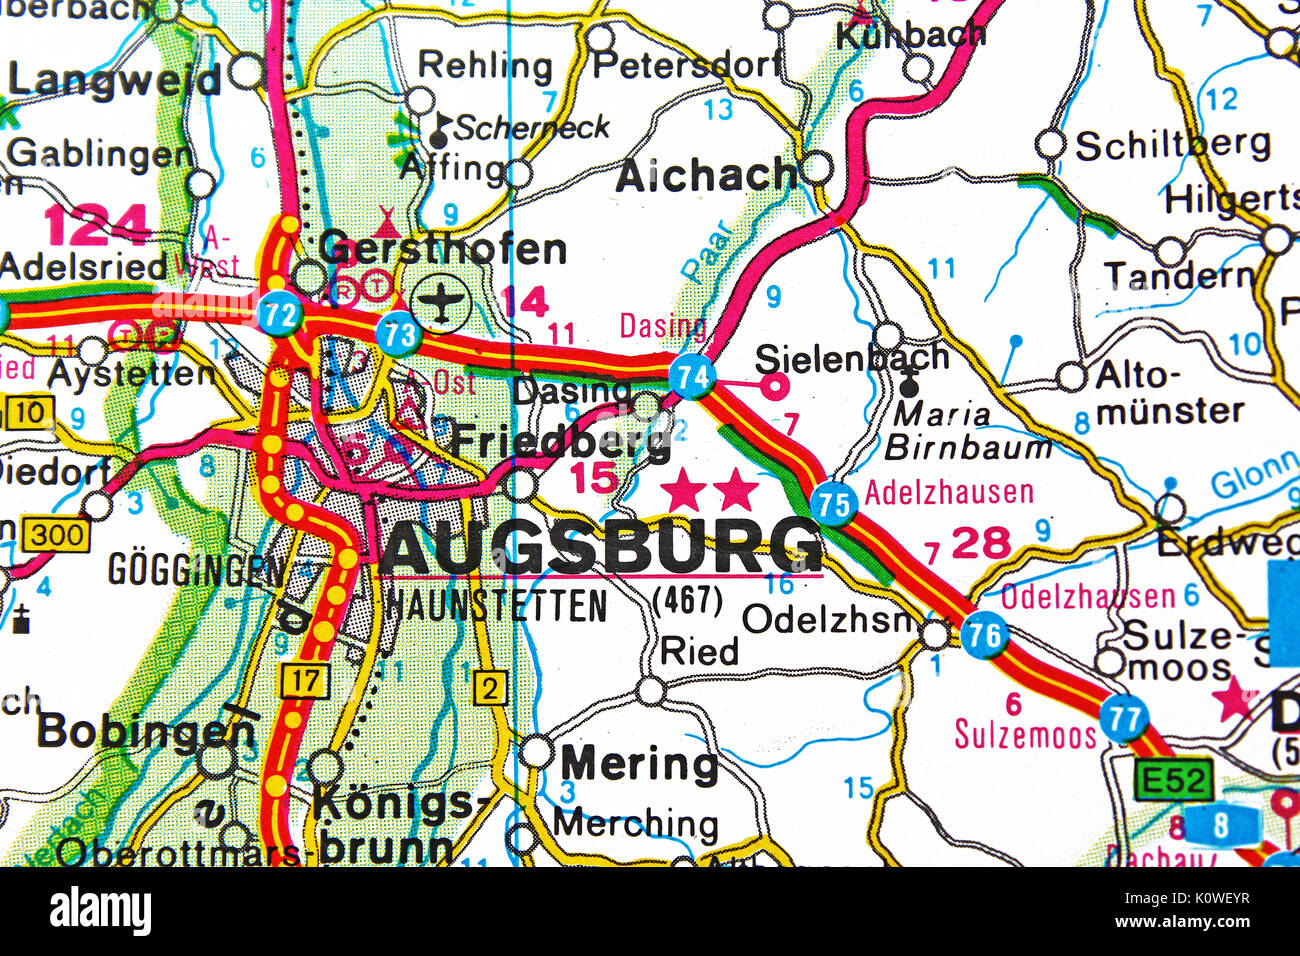 augsburg tourist map